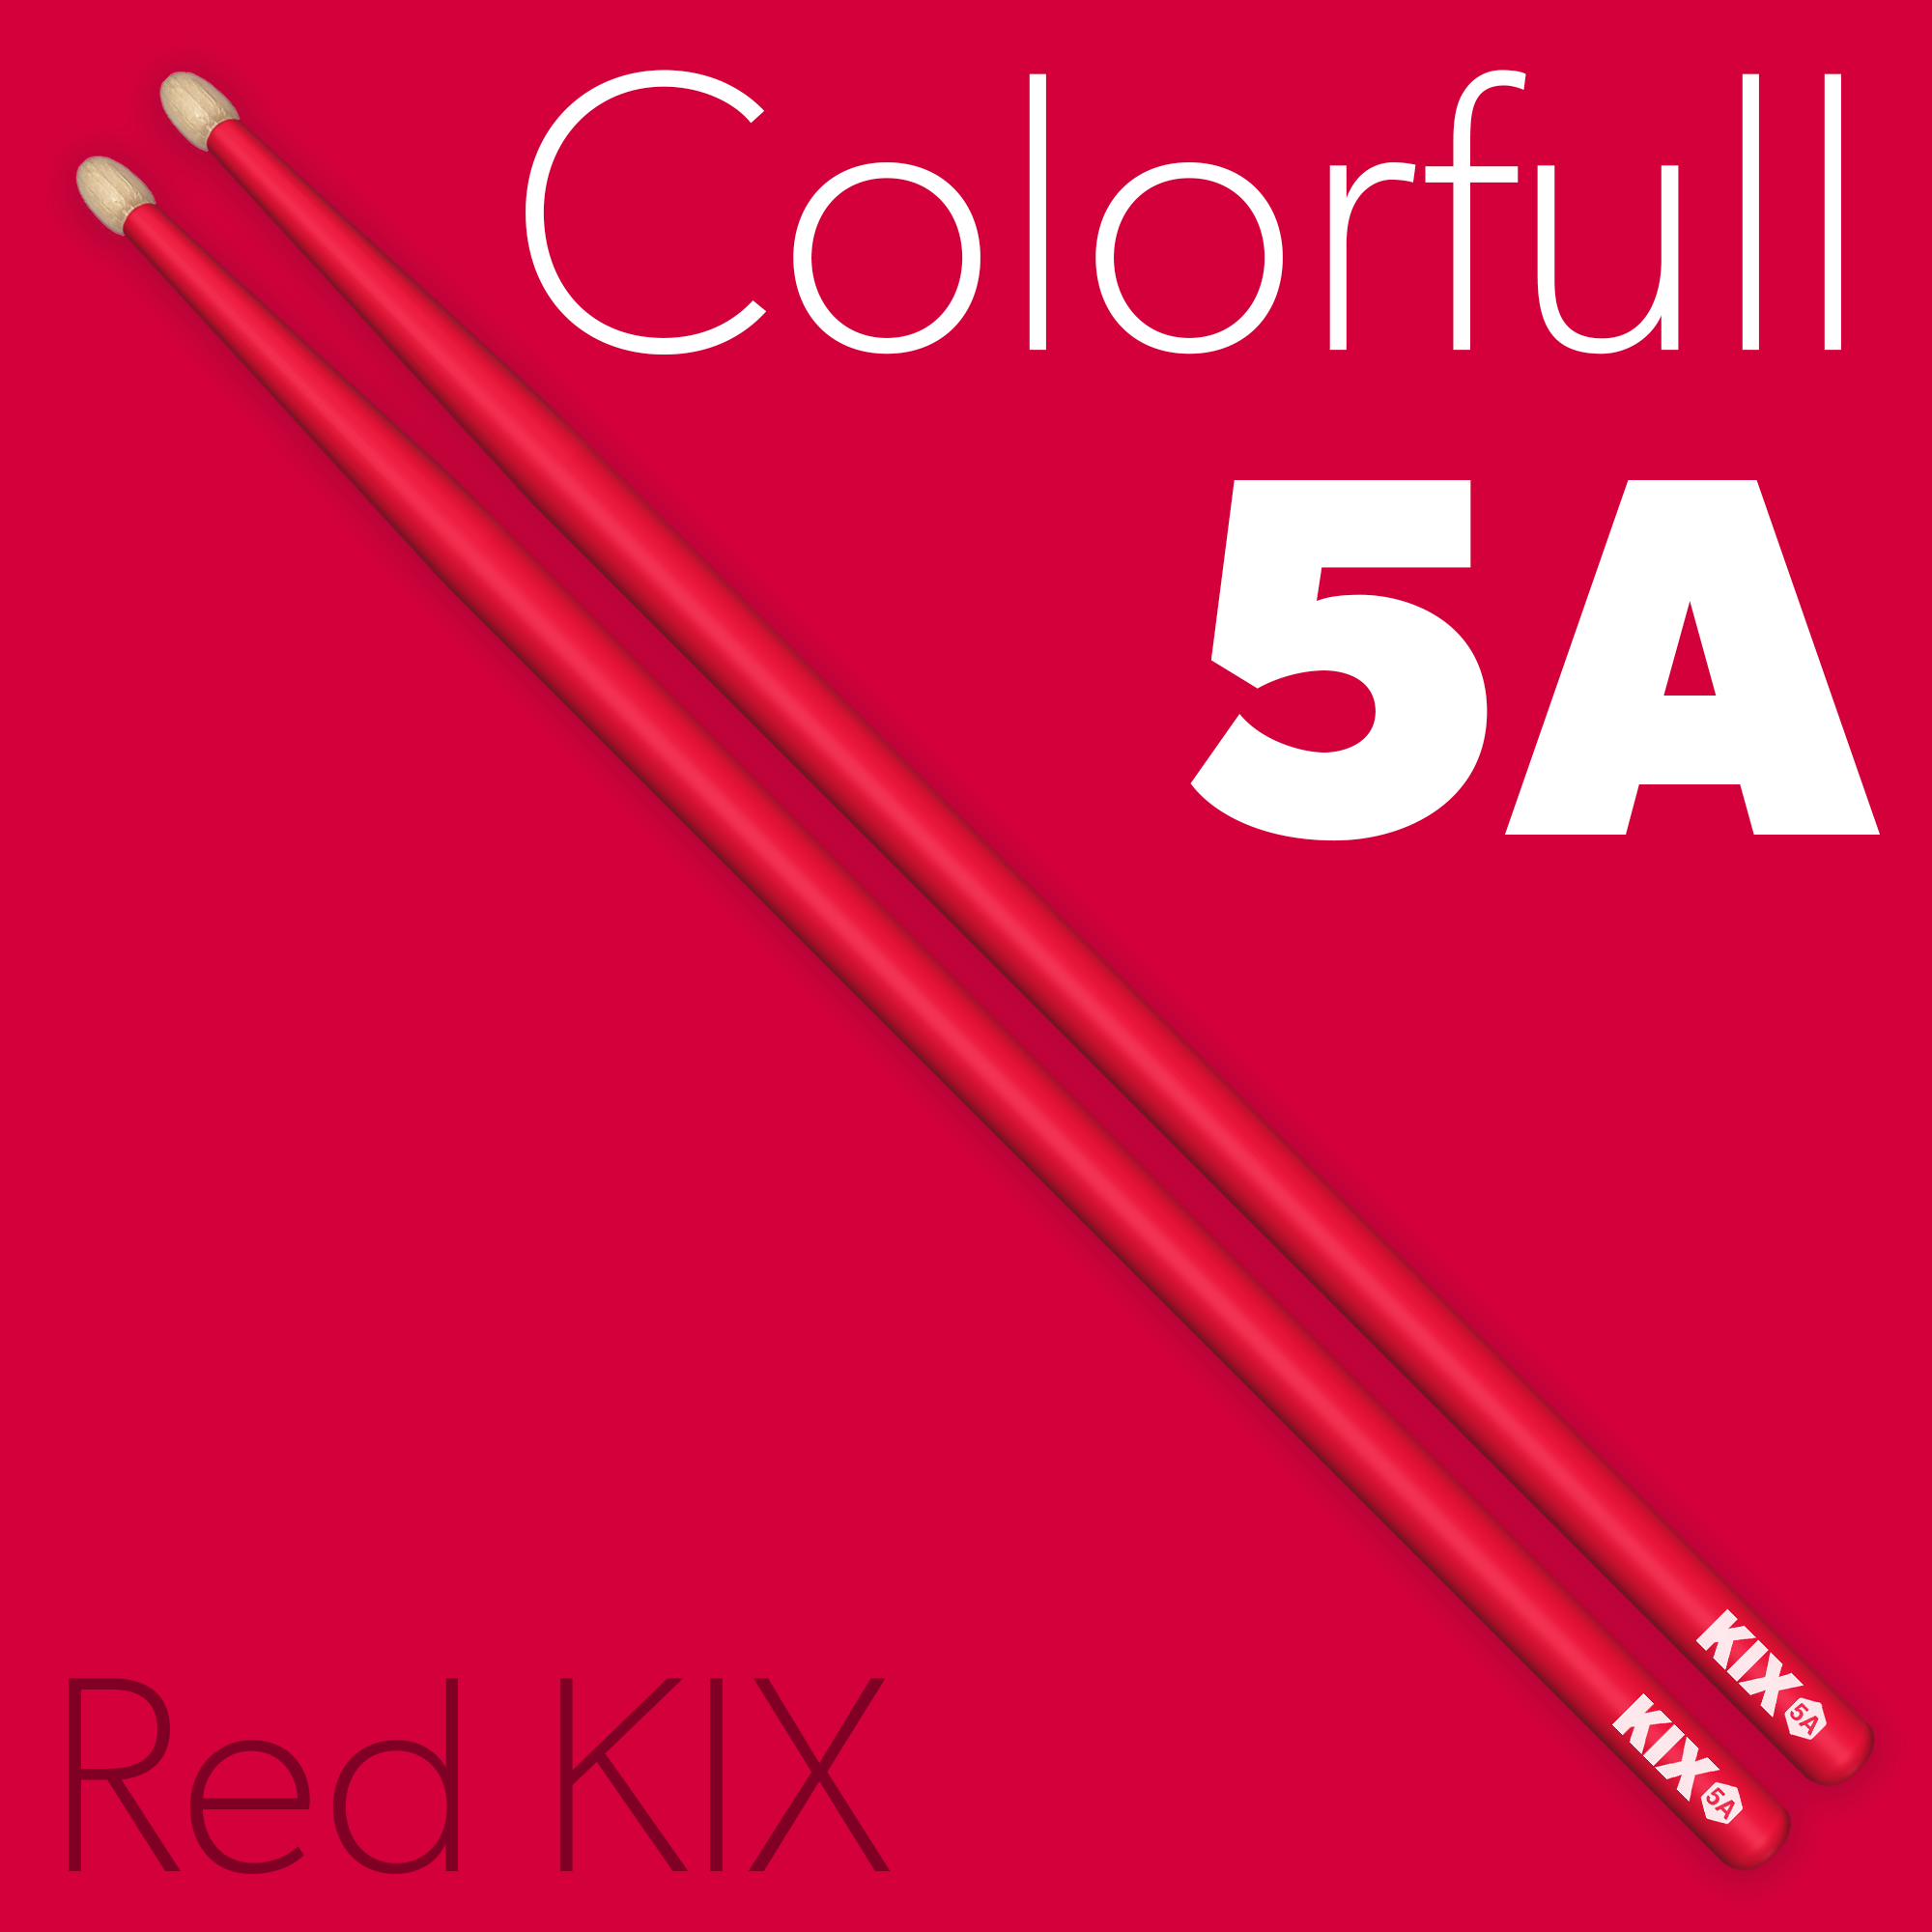 Baguettes Colorfull 5A - Red KIX